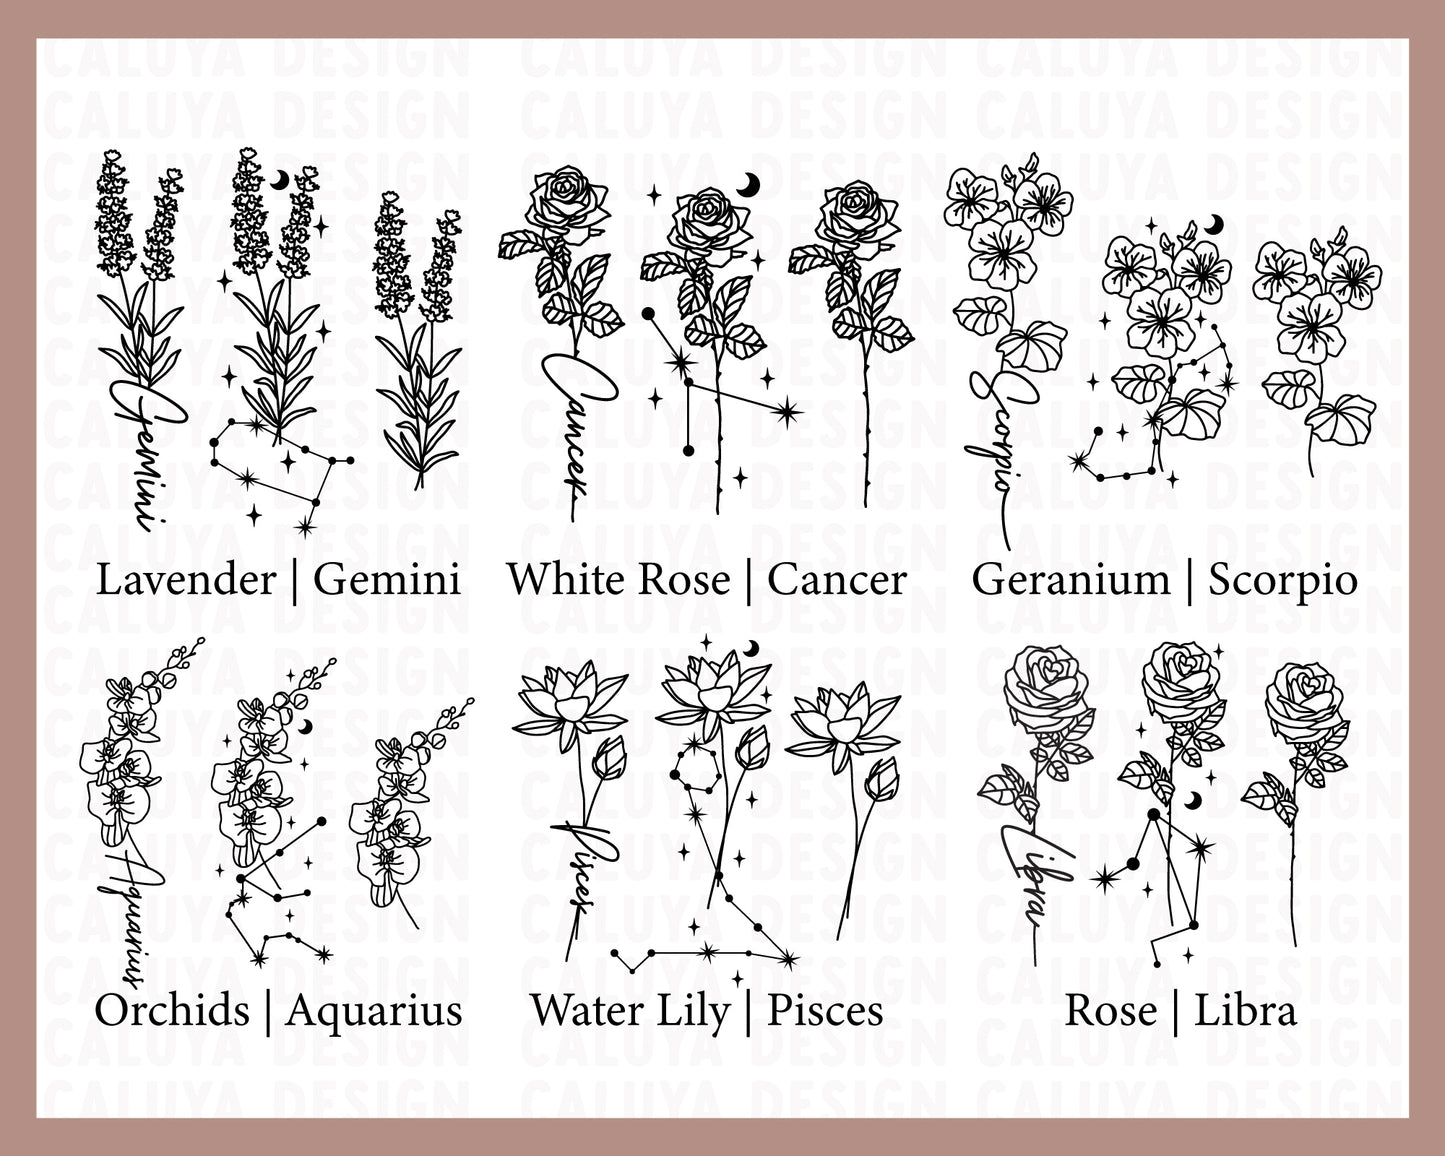 Zodiac Flower SVG Bundle | Birth Month Flower SVG Bundle